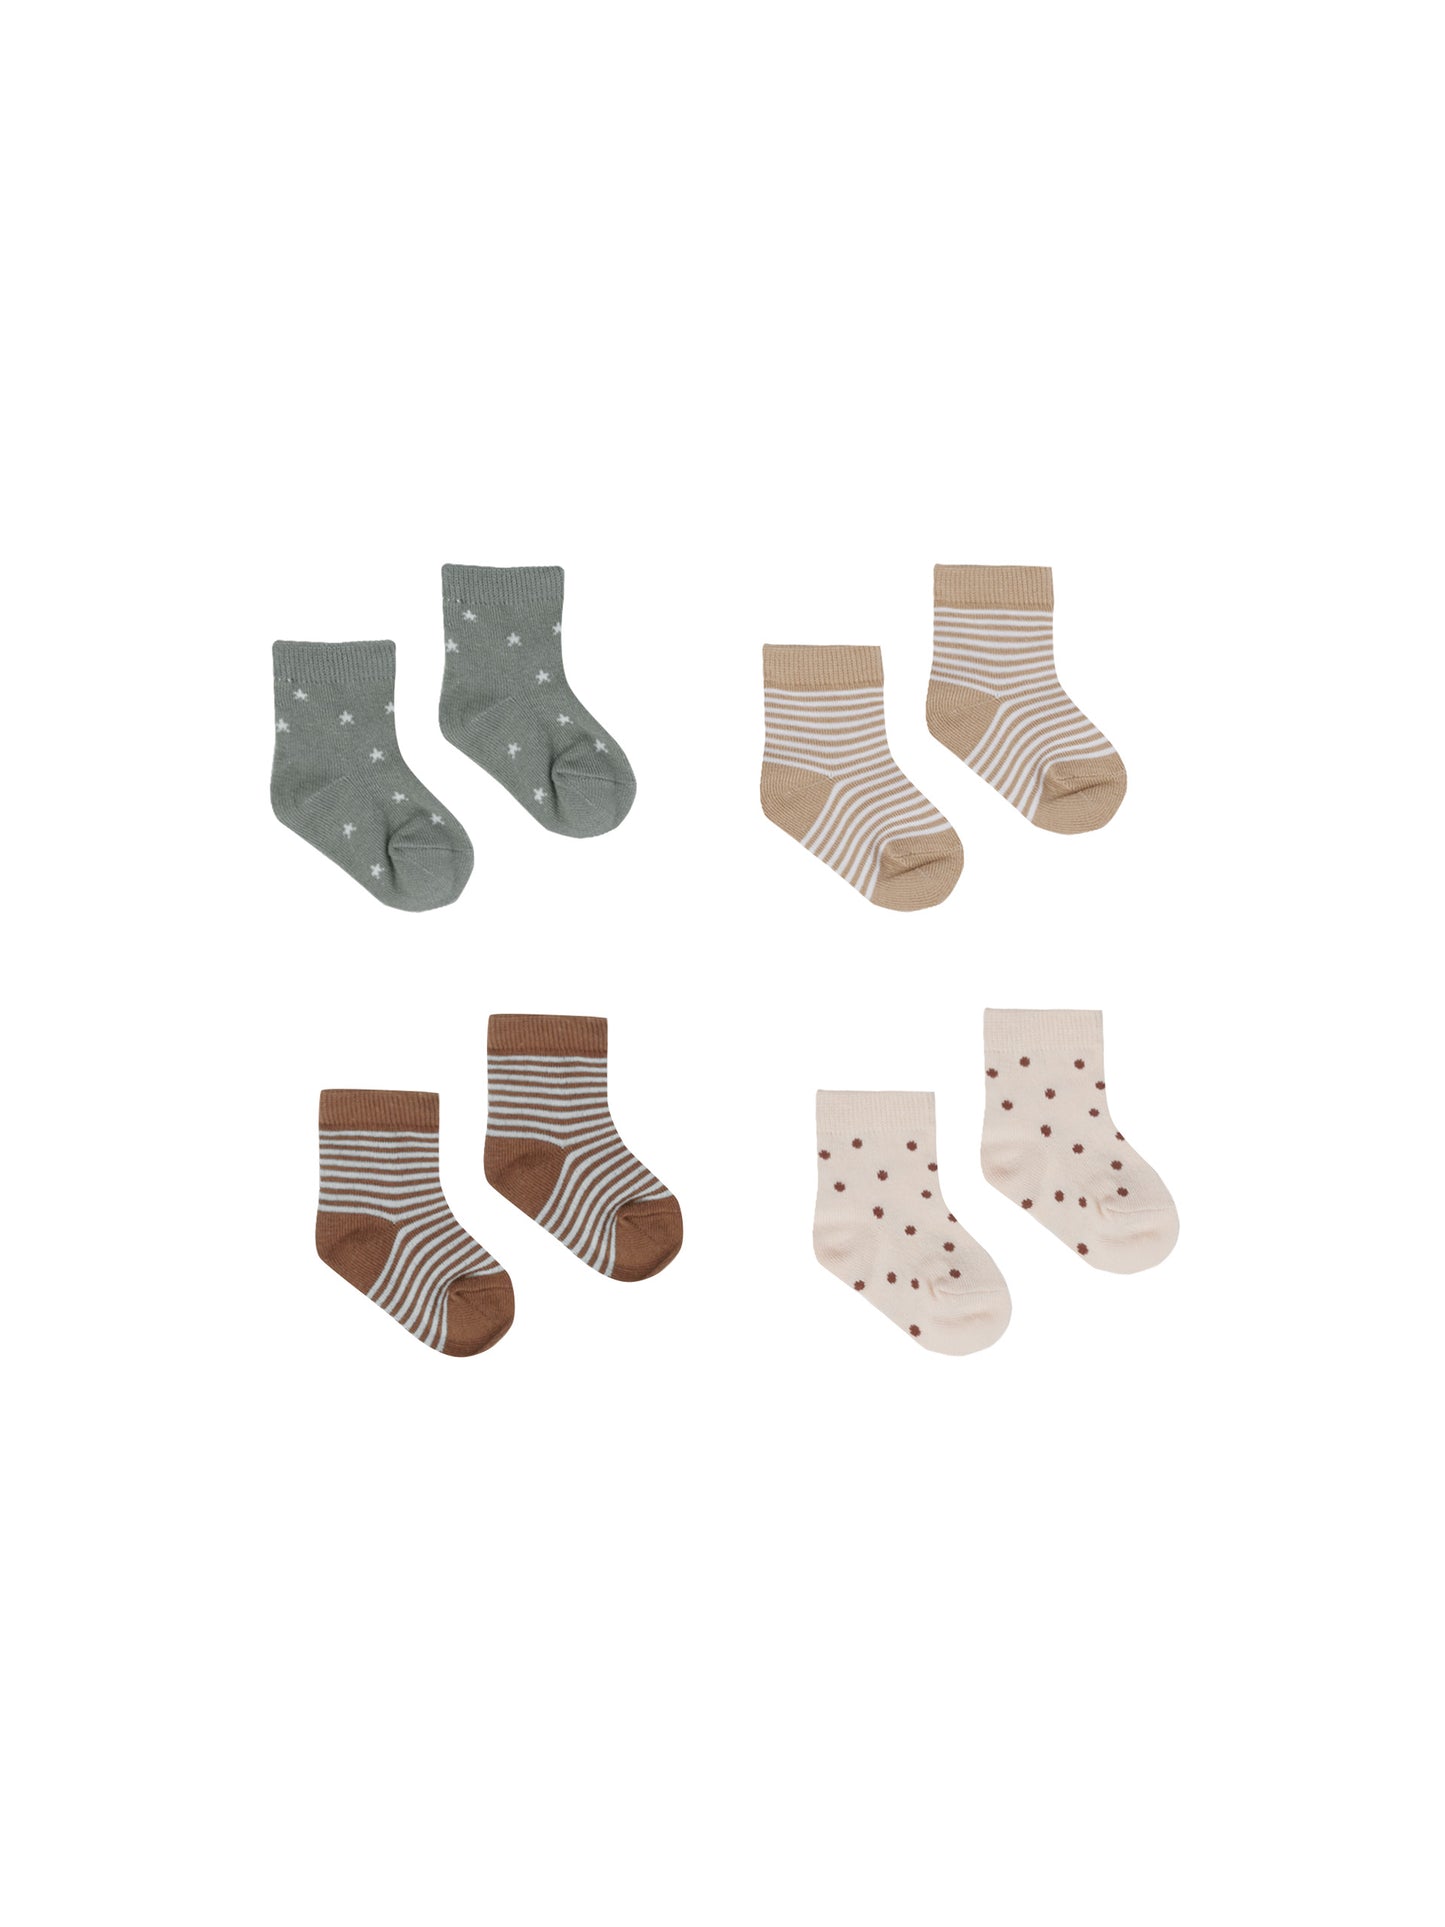 printed socks, set of 4 | latte stripe, stars, dot